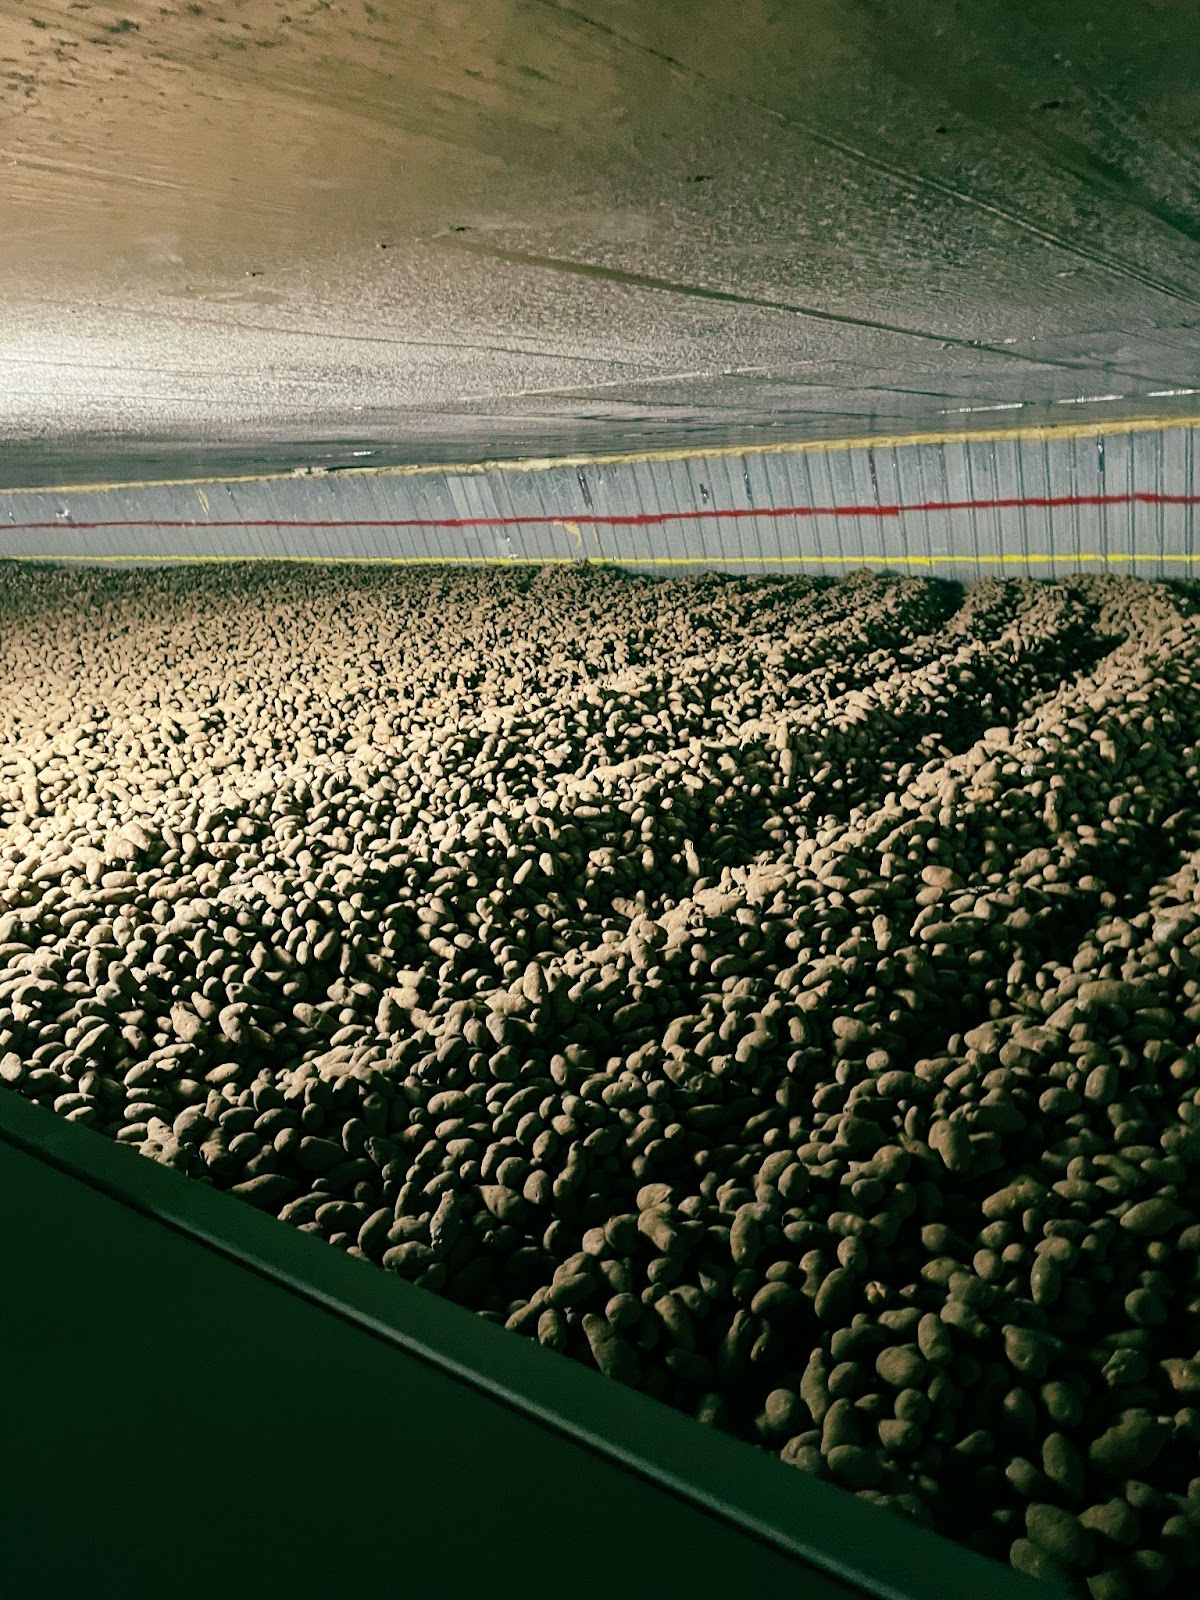 more washington state potatoes in a silo